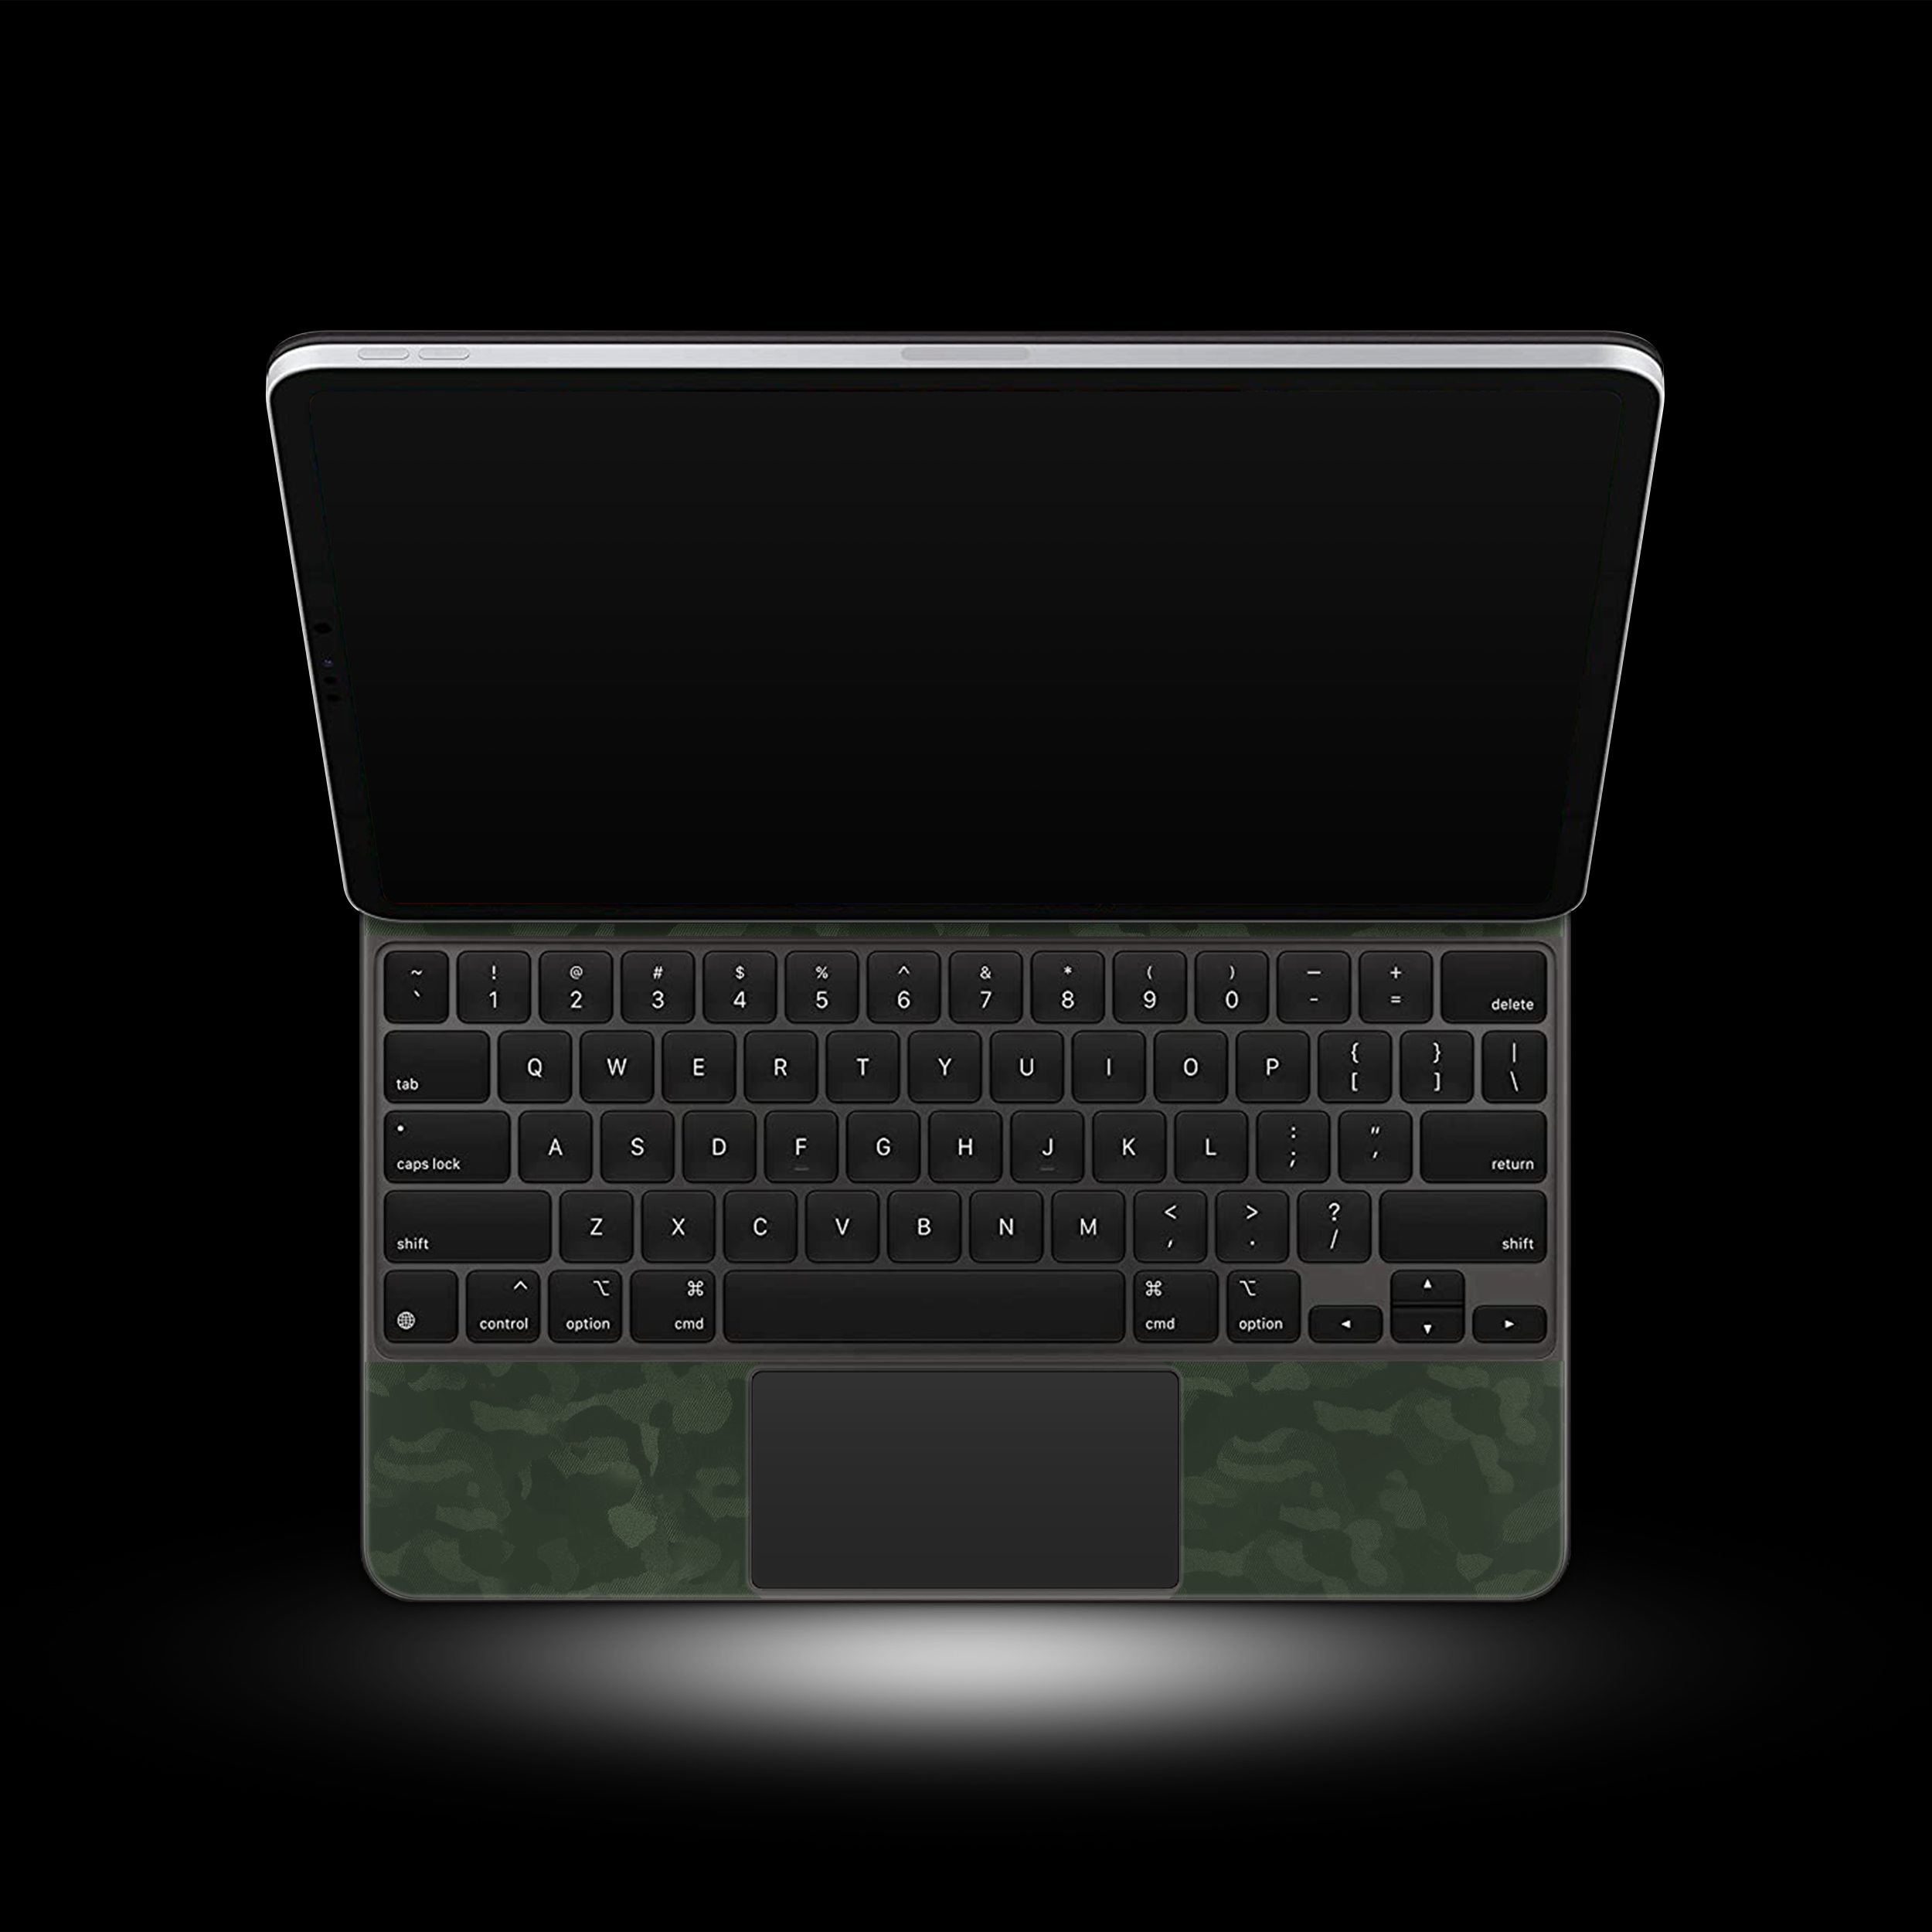 Green Camo (iPad Magic Keyboard Skin)